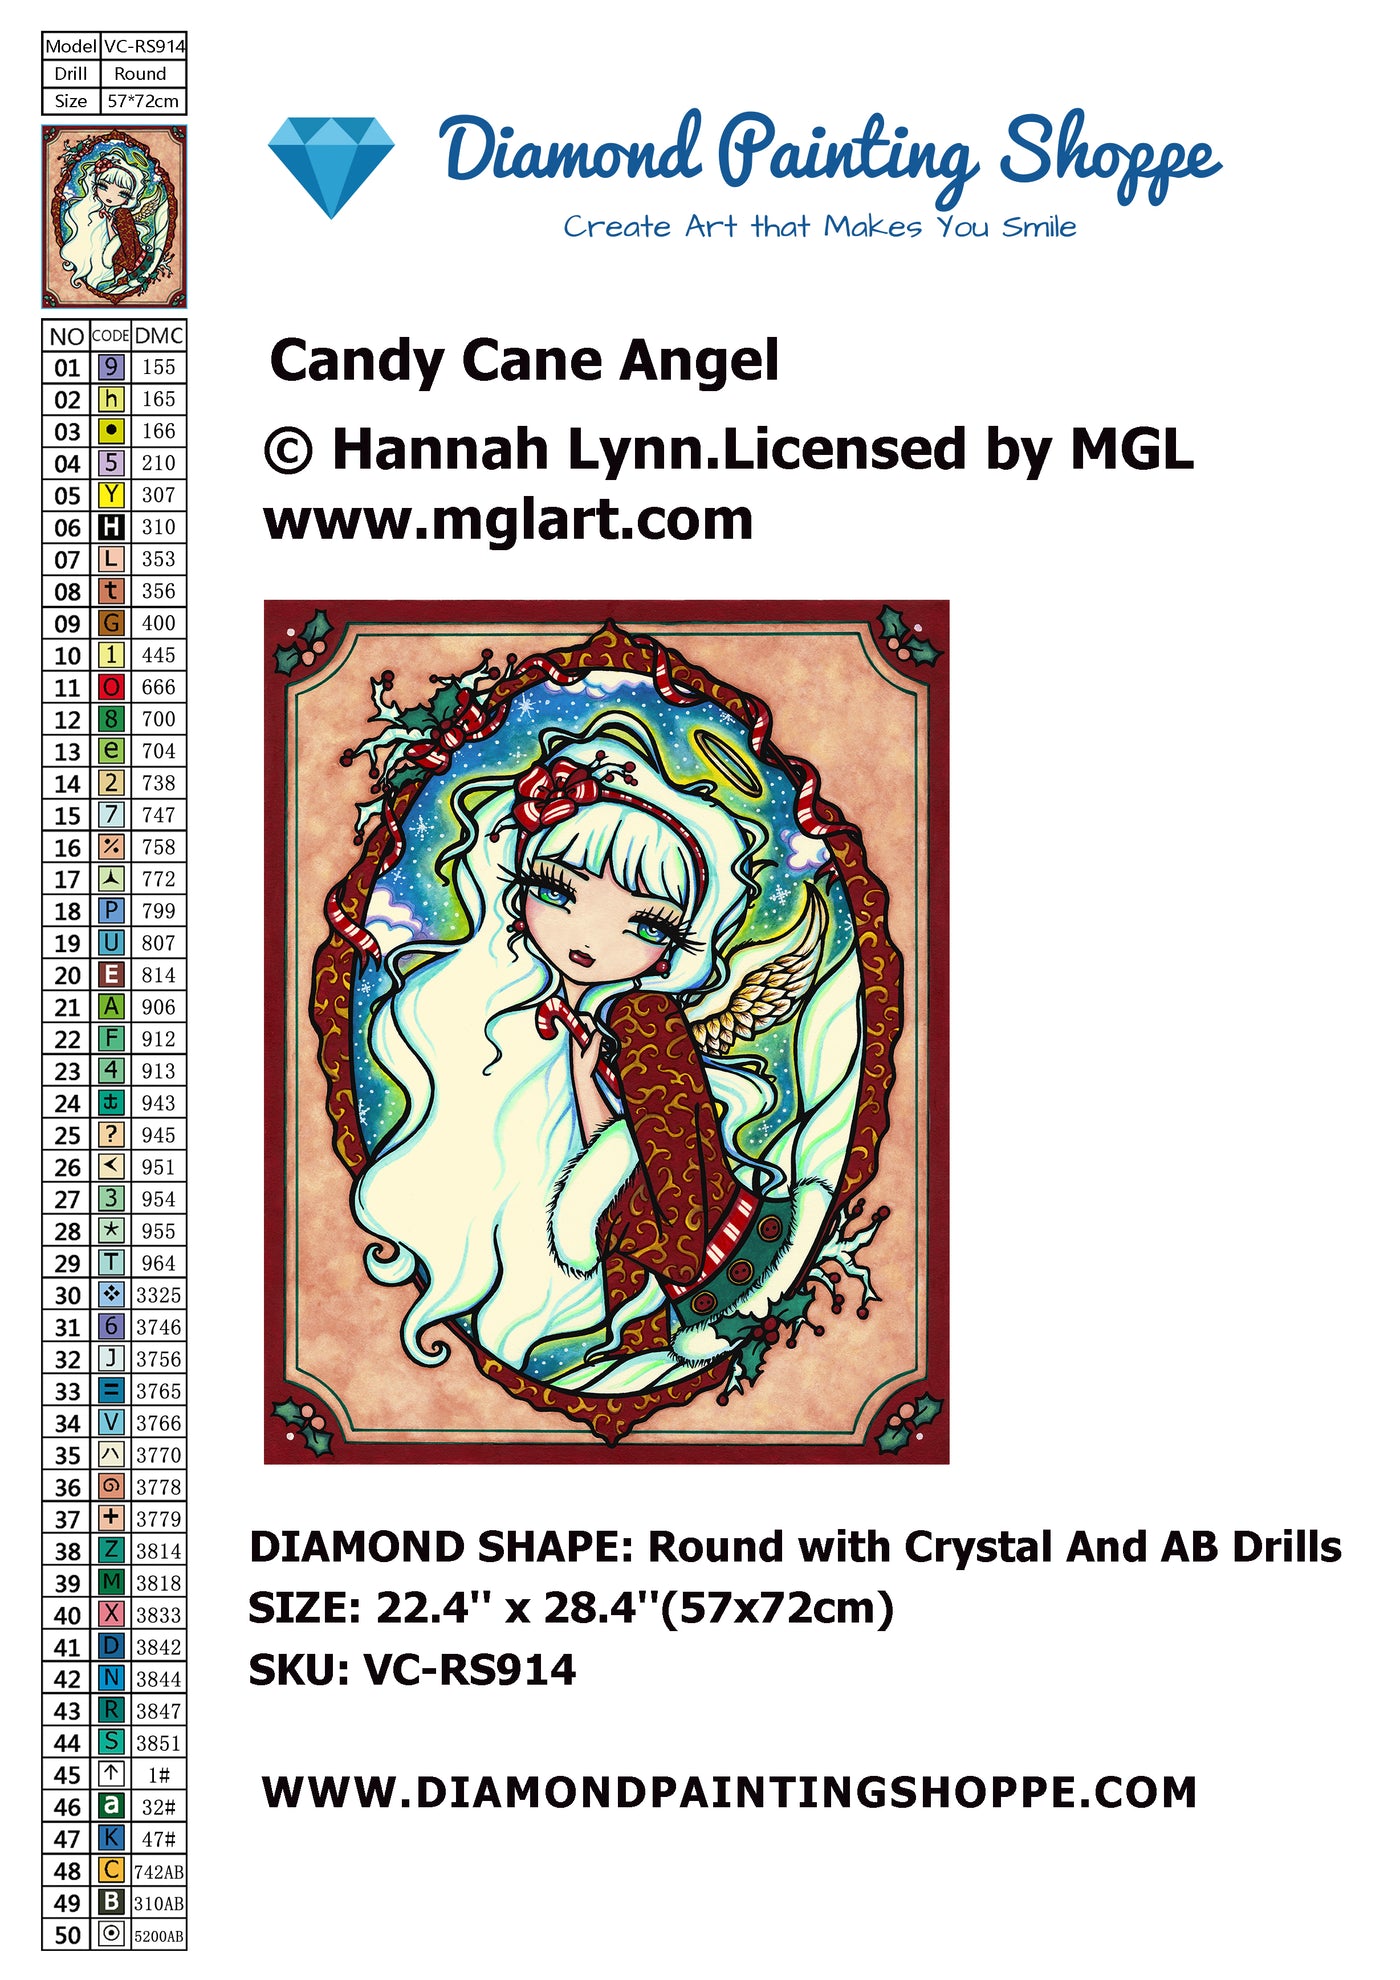 Candy Cane Angel